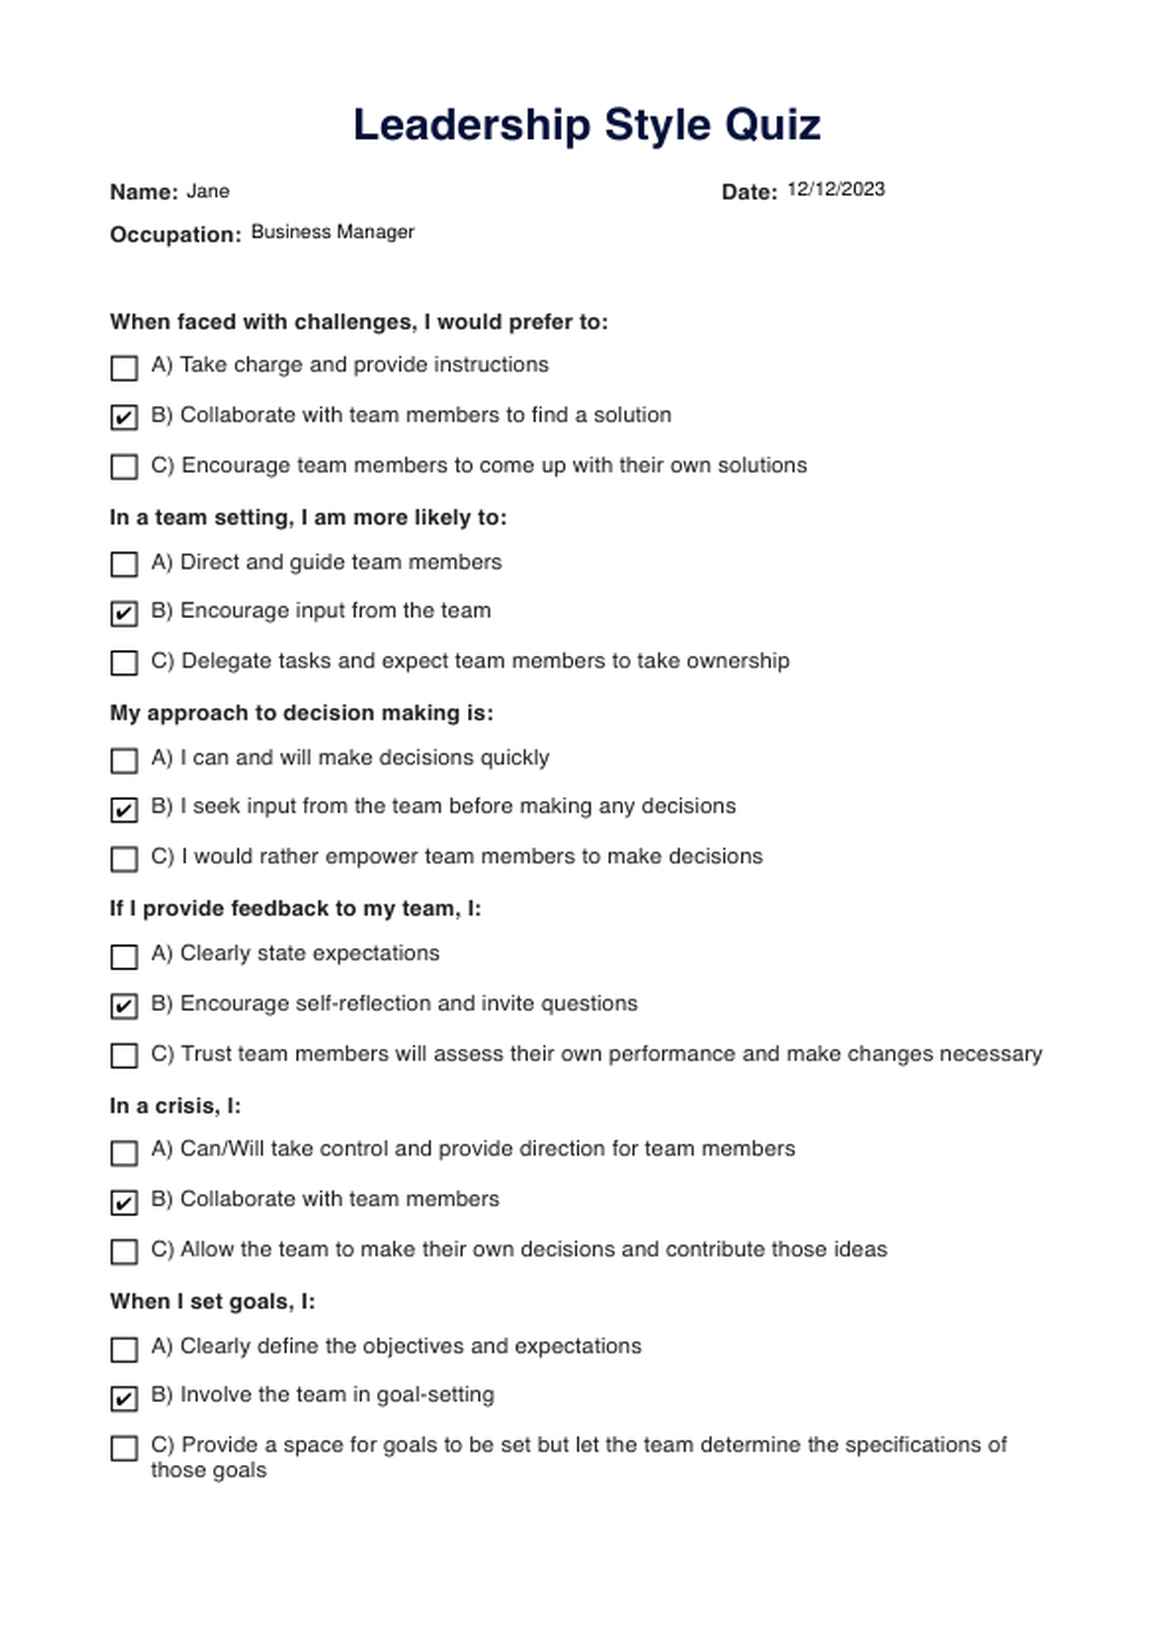 Leadership Style Quiz PDF Example